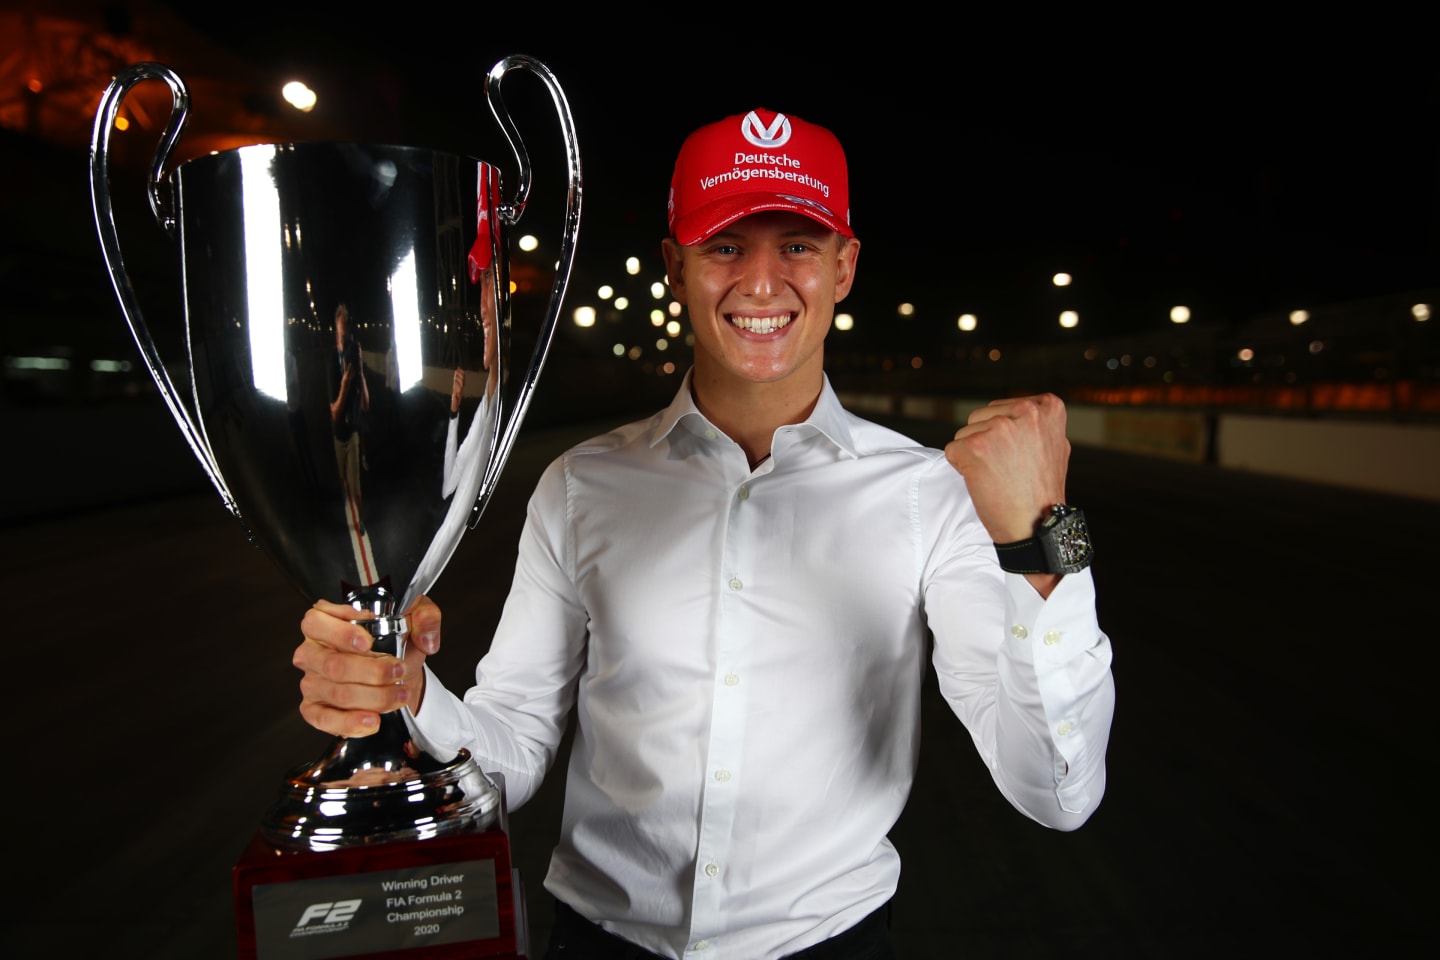 BAHRAIN, BAHRAIN - DECEMBER 06: 2020 F2 Champion Mick Schumacher of Germany and Prema Racing poses